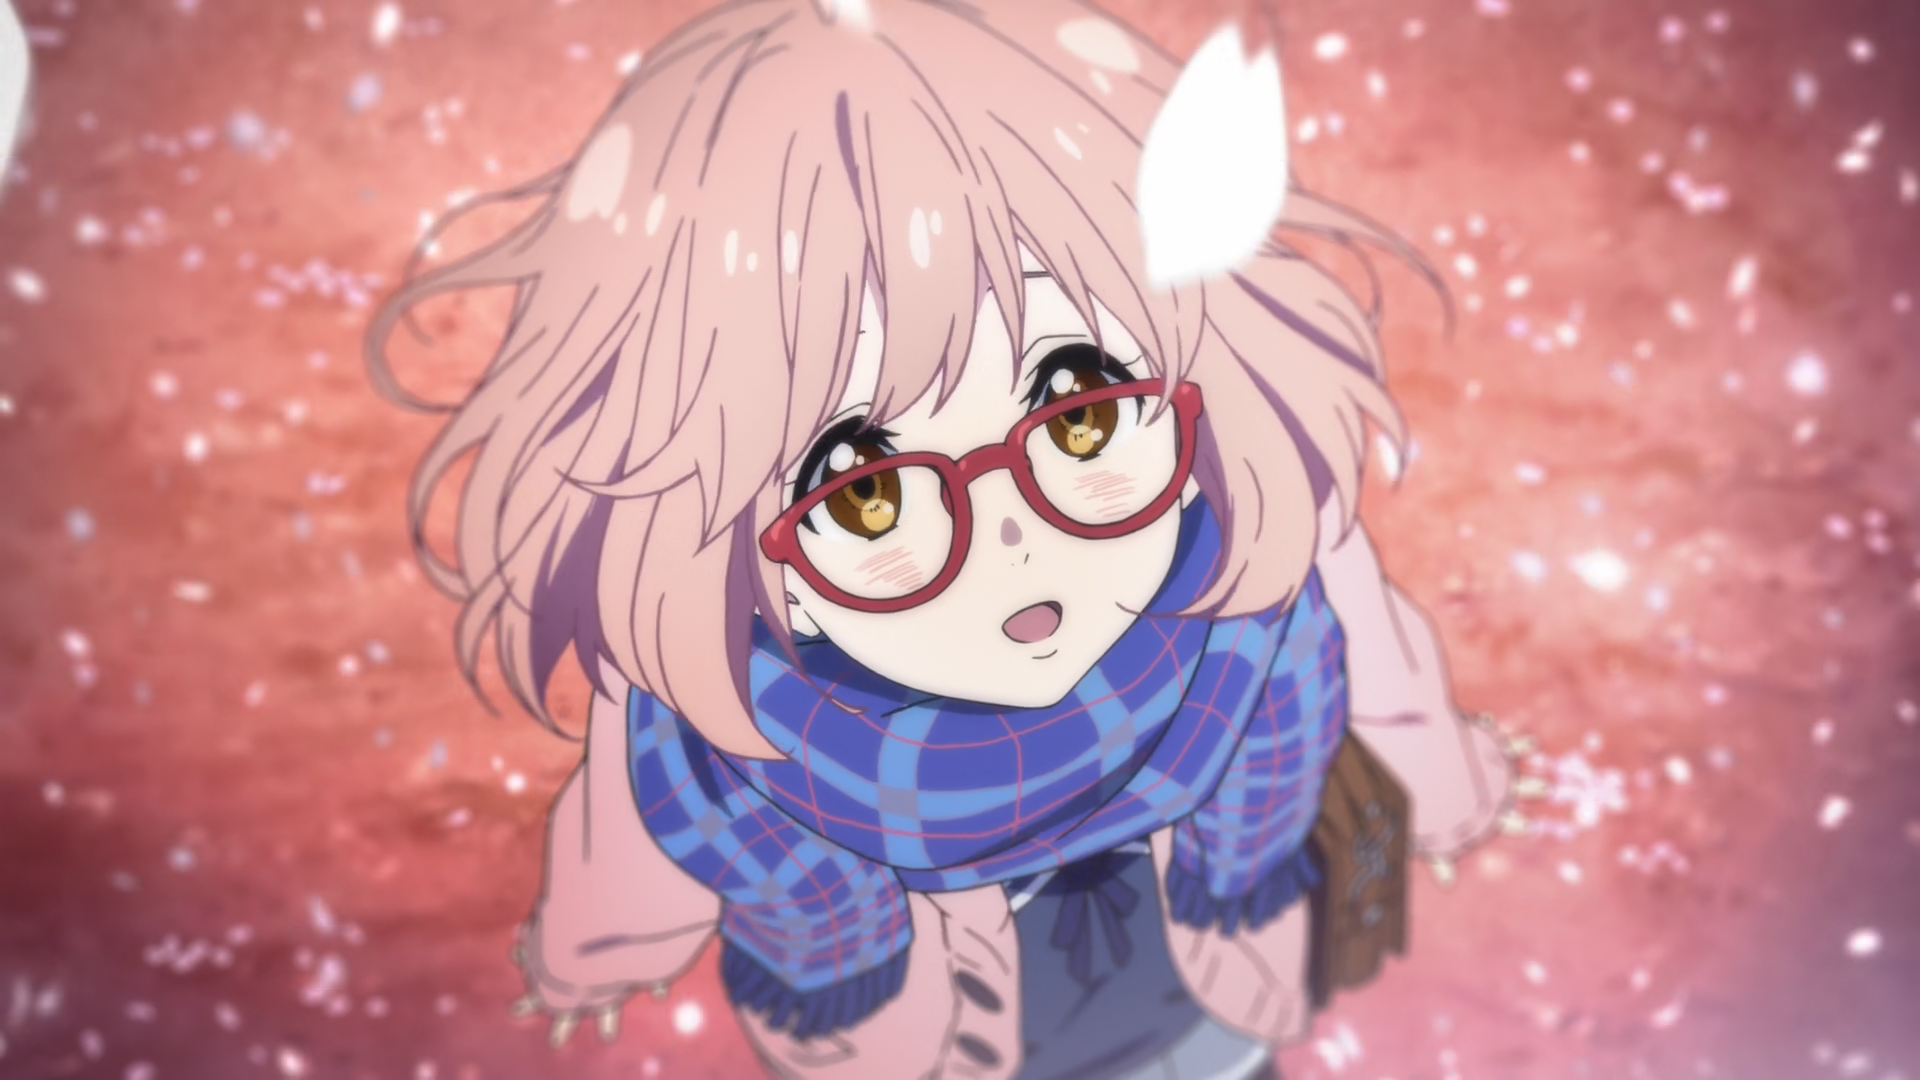 Anime 1920x1080 Kyoukai no Kanata Kuriyama Mirai cherry blossom glasses scarf anime girls short hair petals Anime screenshot